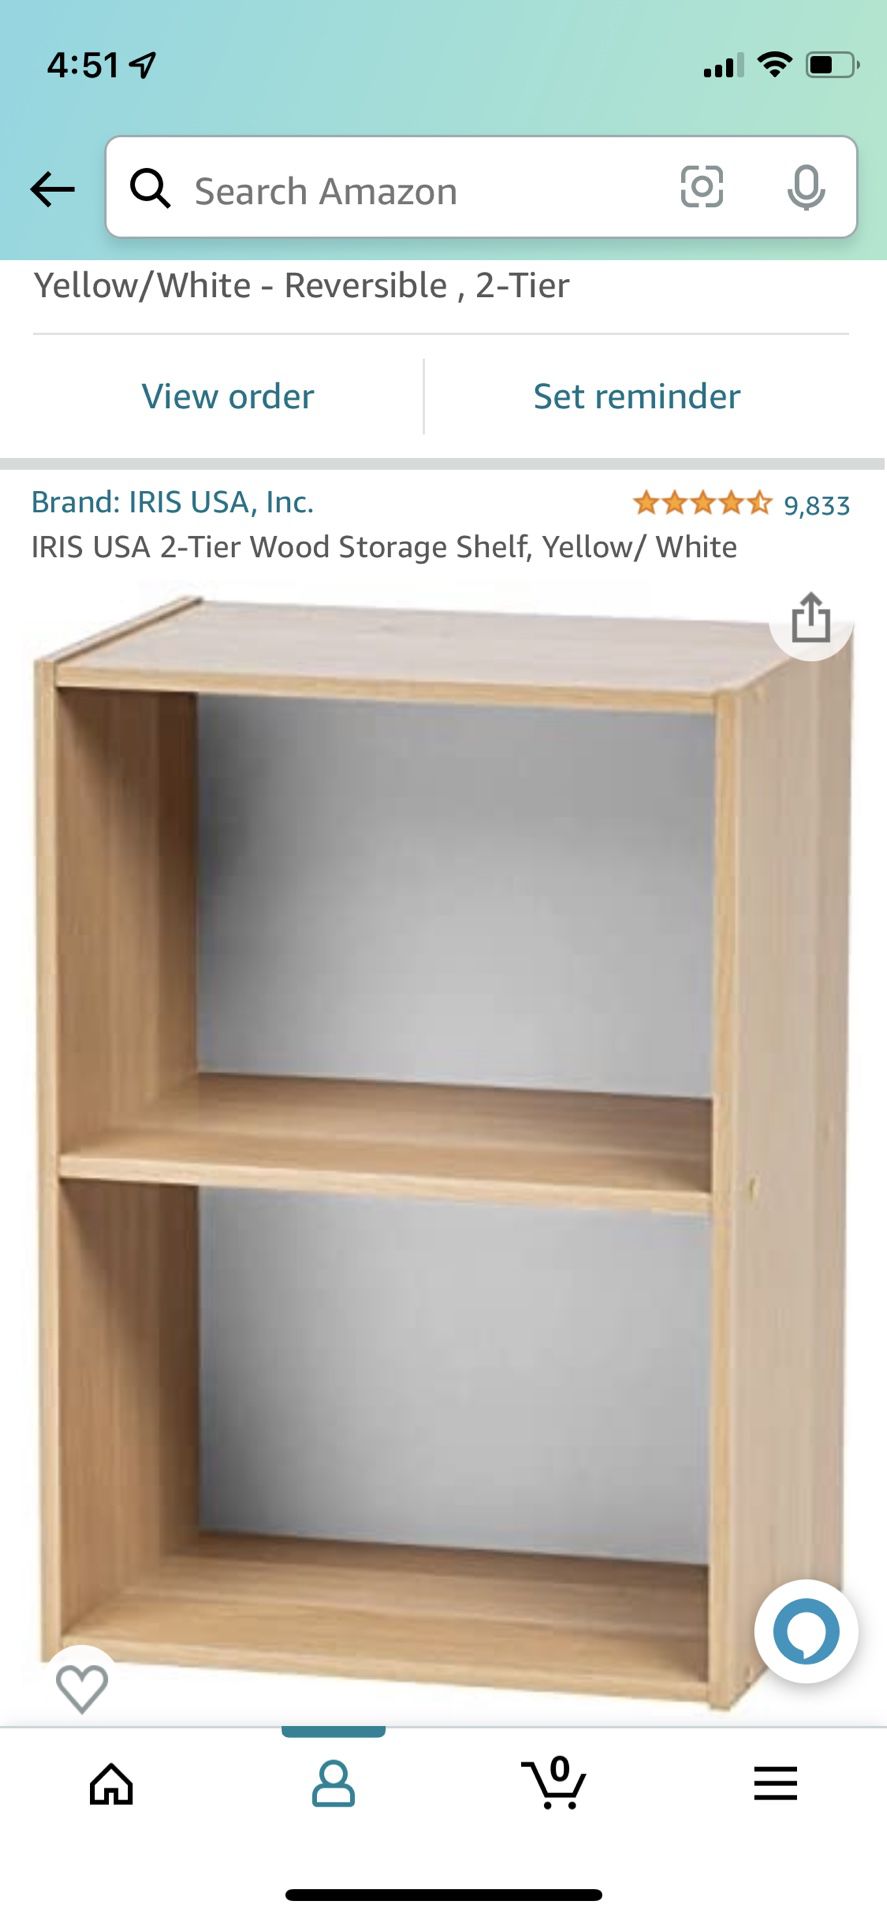  IRIS USA 2-Tier Wood Storage Shelf, Yellow/White